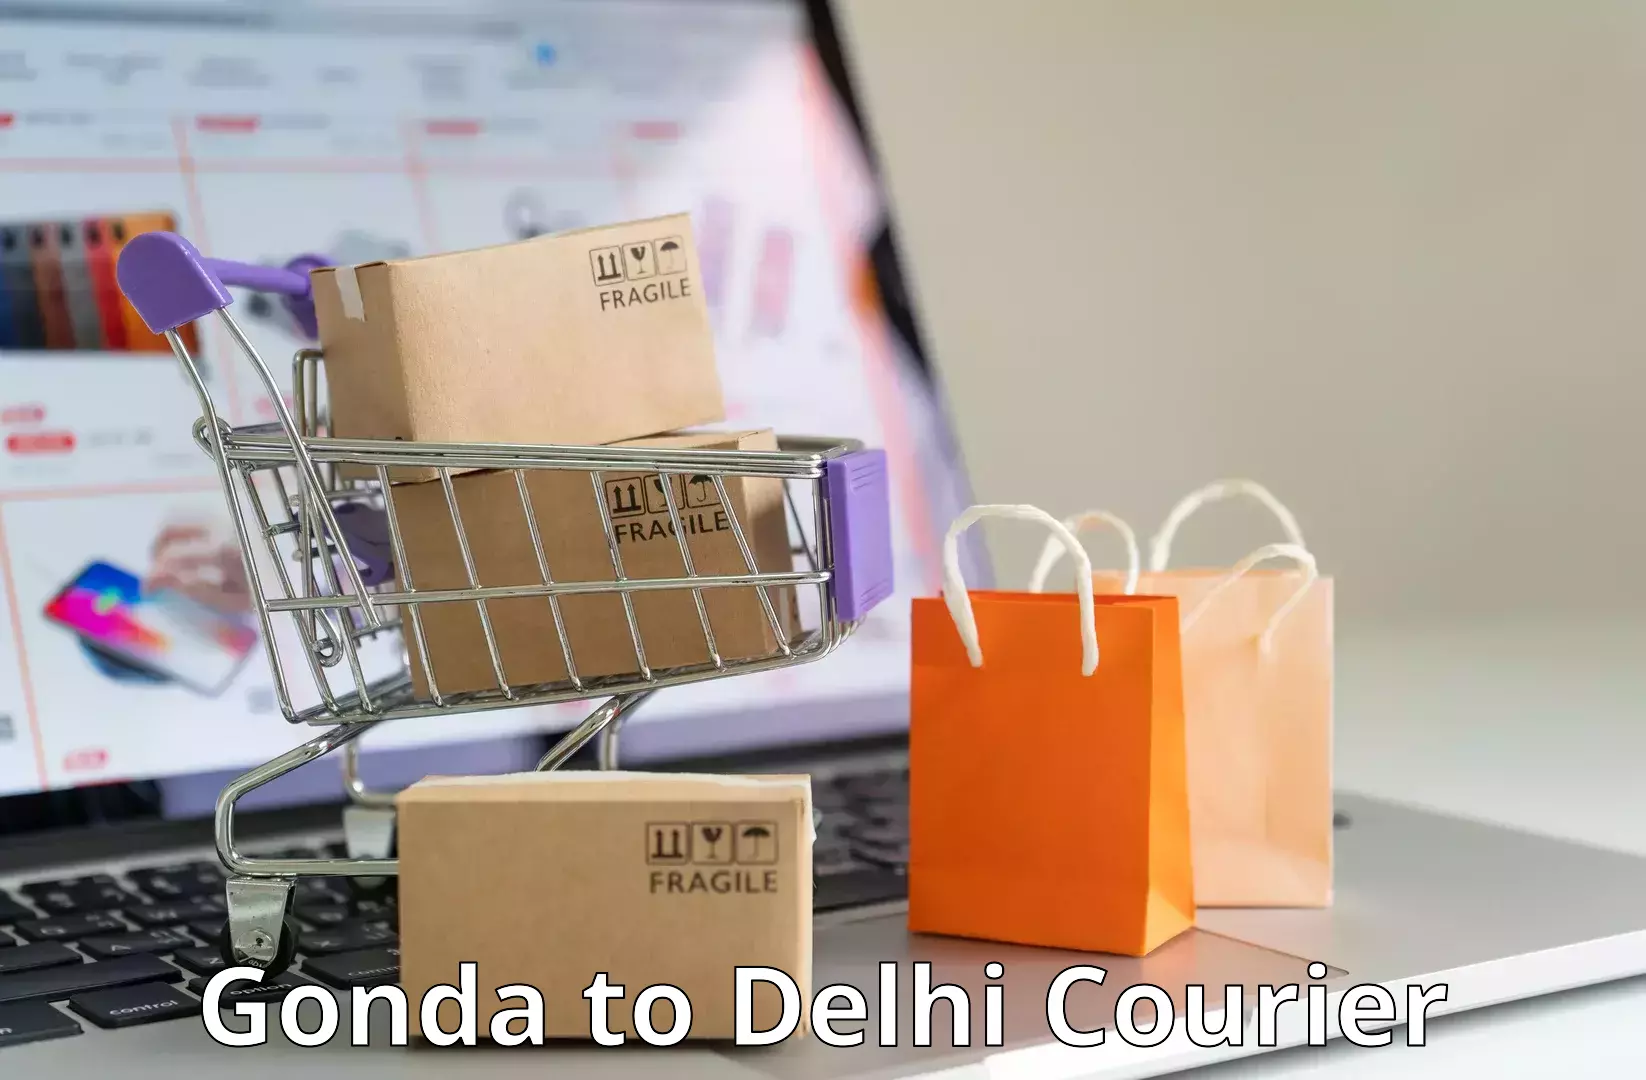 Doorstep delivery service Gonda to Delhi